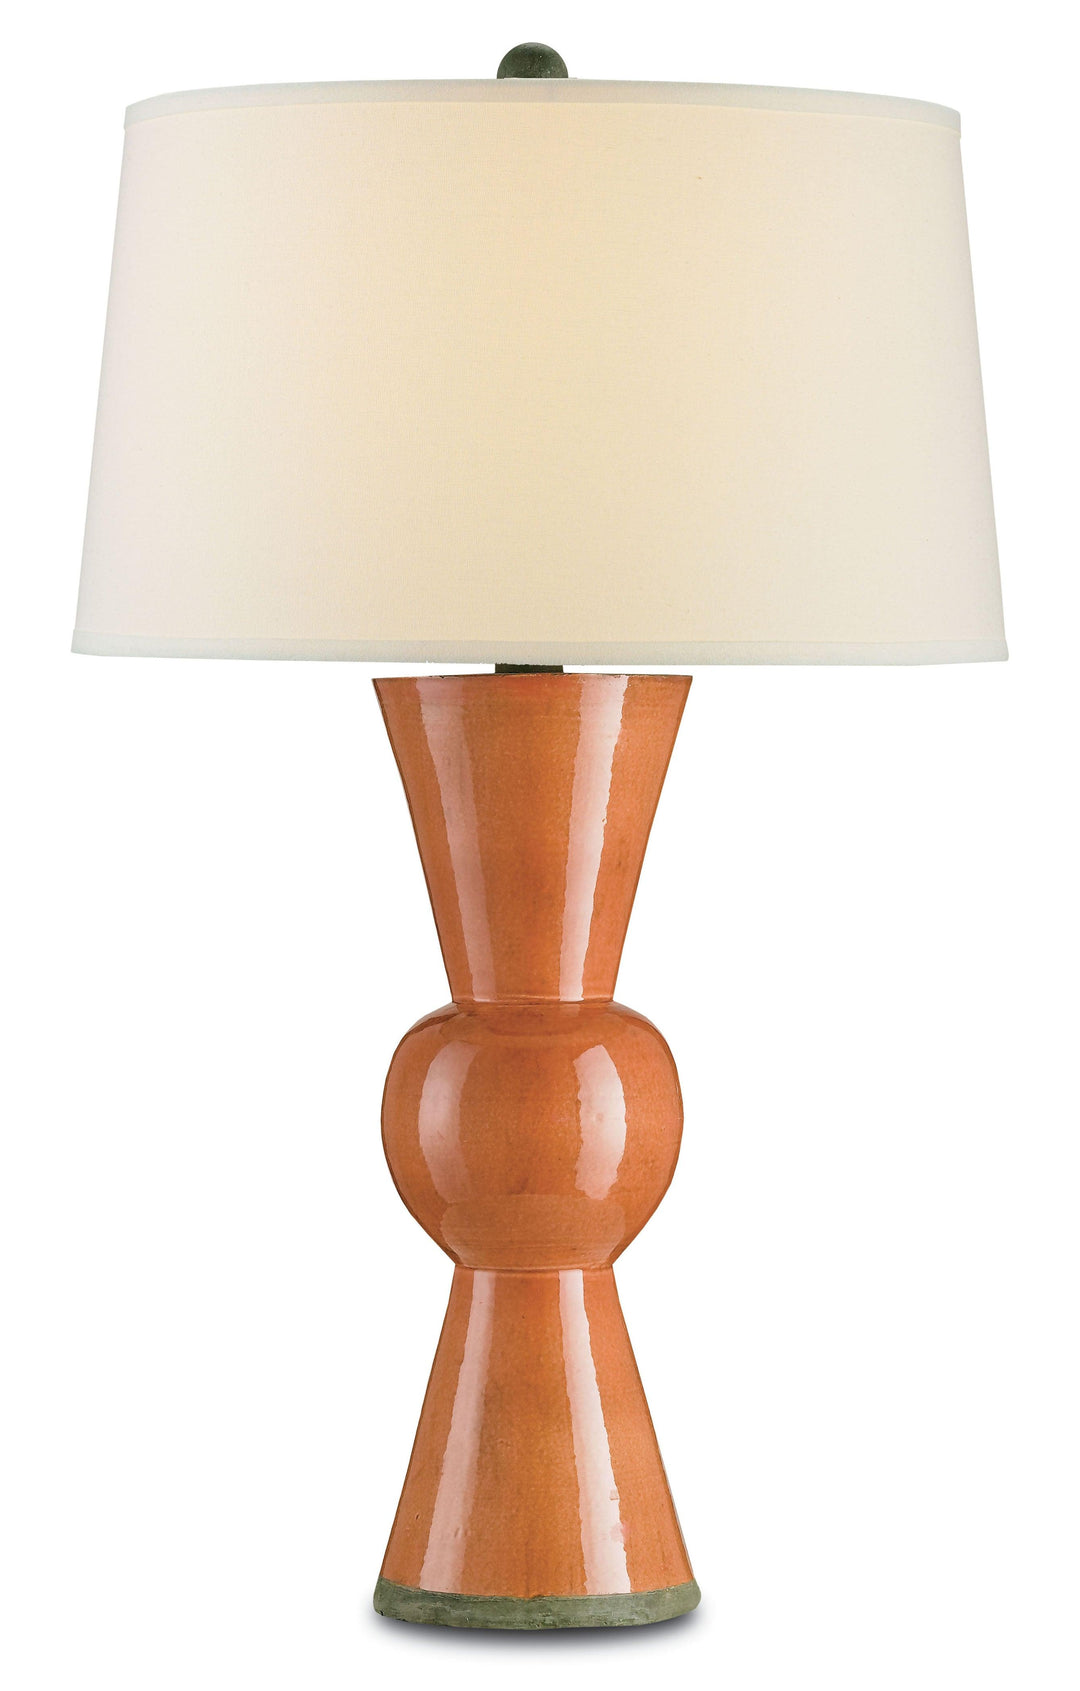 Upbeat Orange Table Lamp - Casey & Company